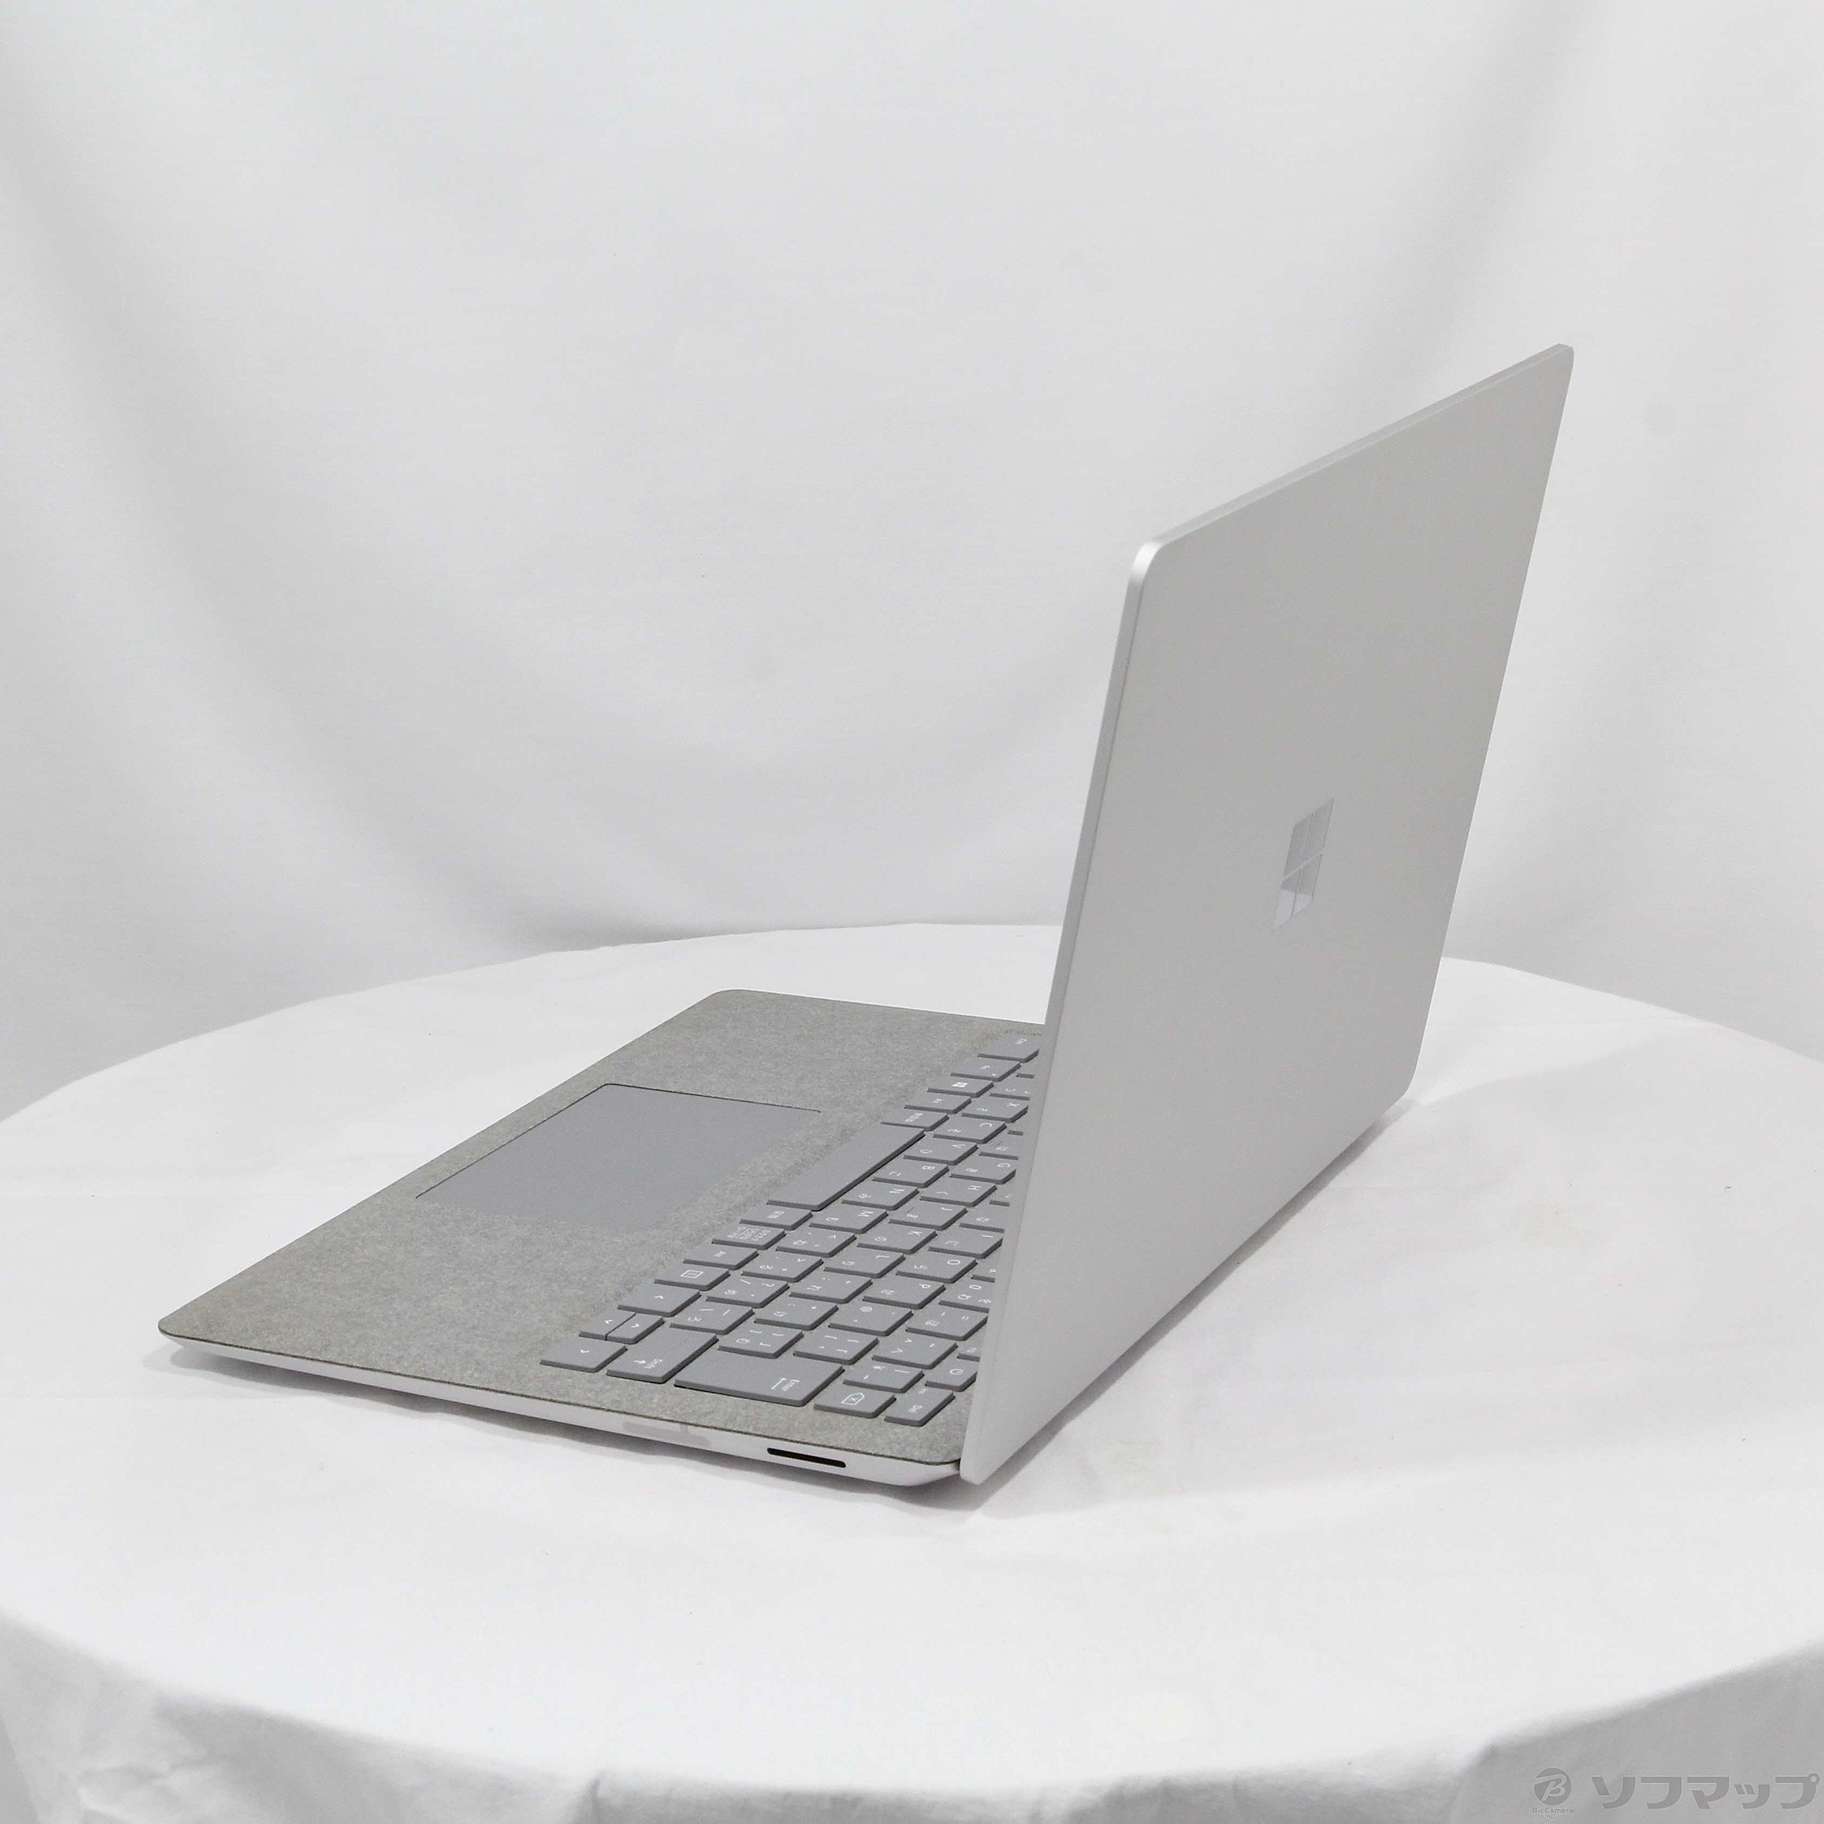 中古】Surface Laptop 2 〔Core i5／8GB／SSD128GB〕 LQL-00025